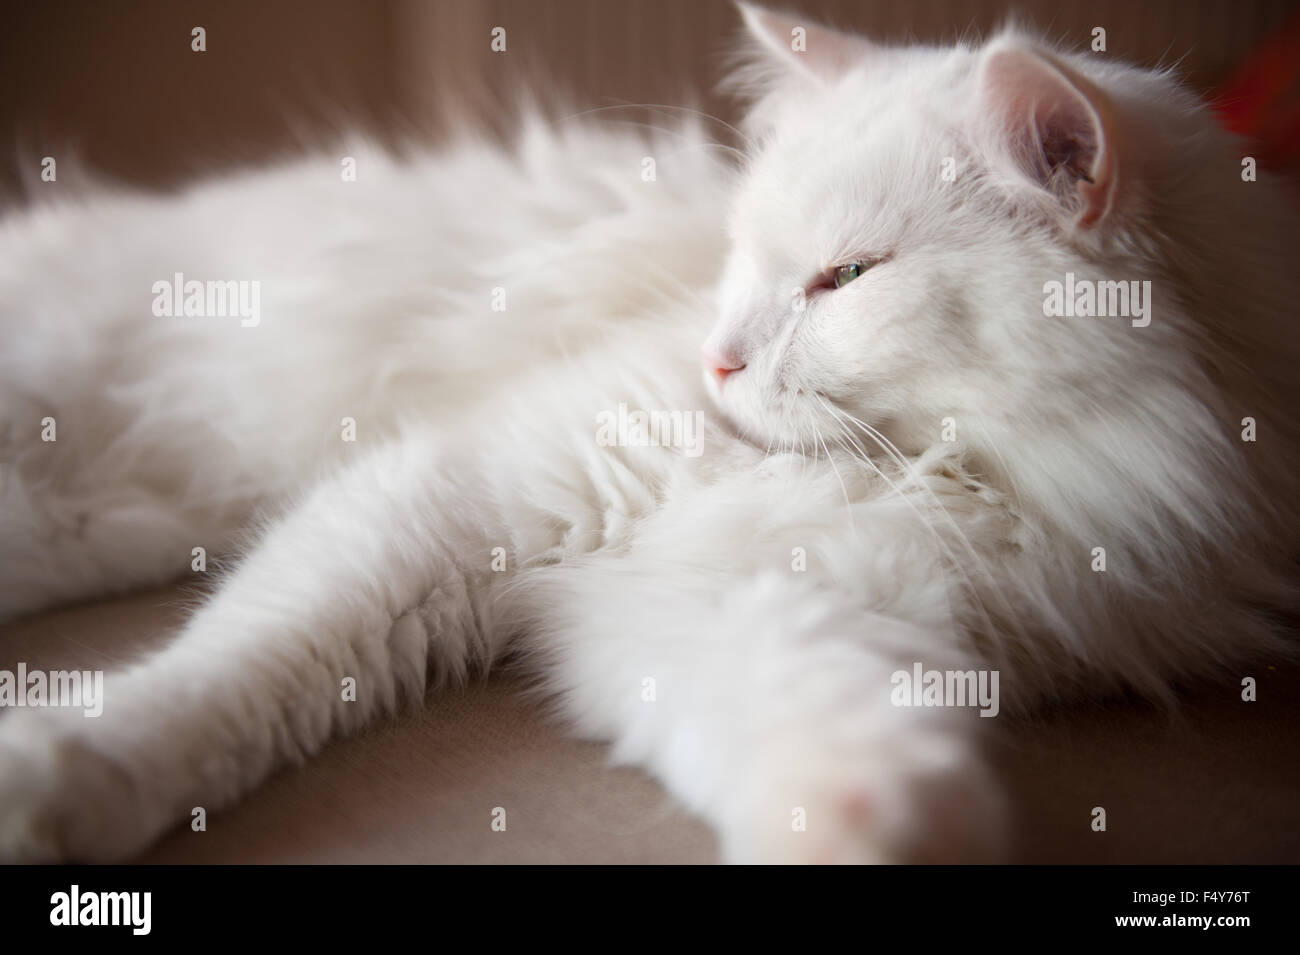 Turkish Angora sleepy cat, Ankara kedisi or Ankara cat, domestic breed white long hair cat portrait, animal lying in horizontal Stock Photo